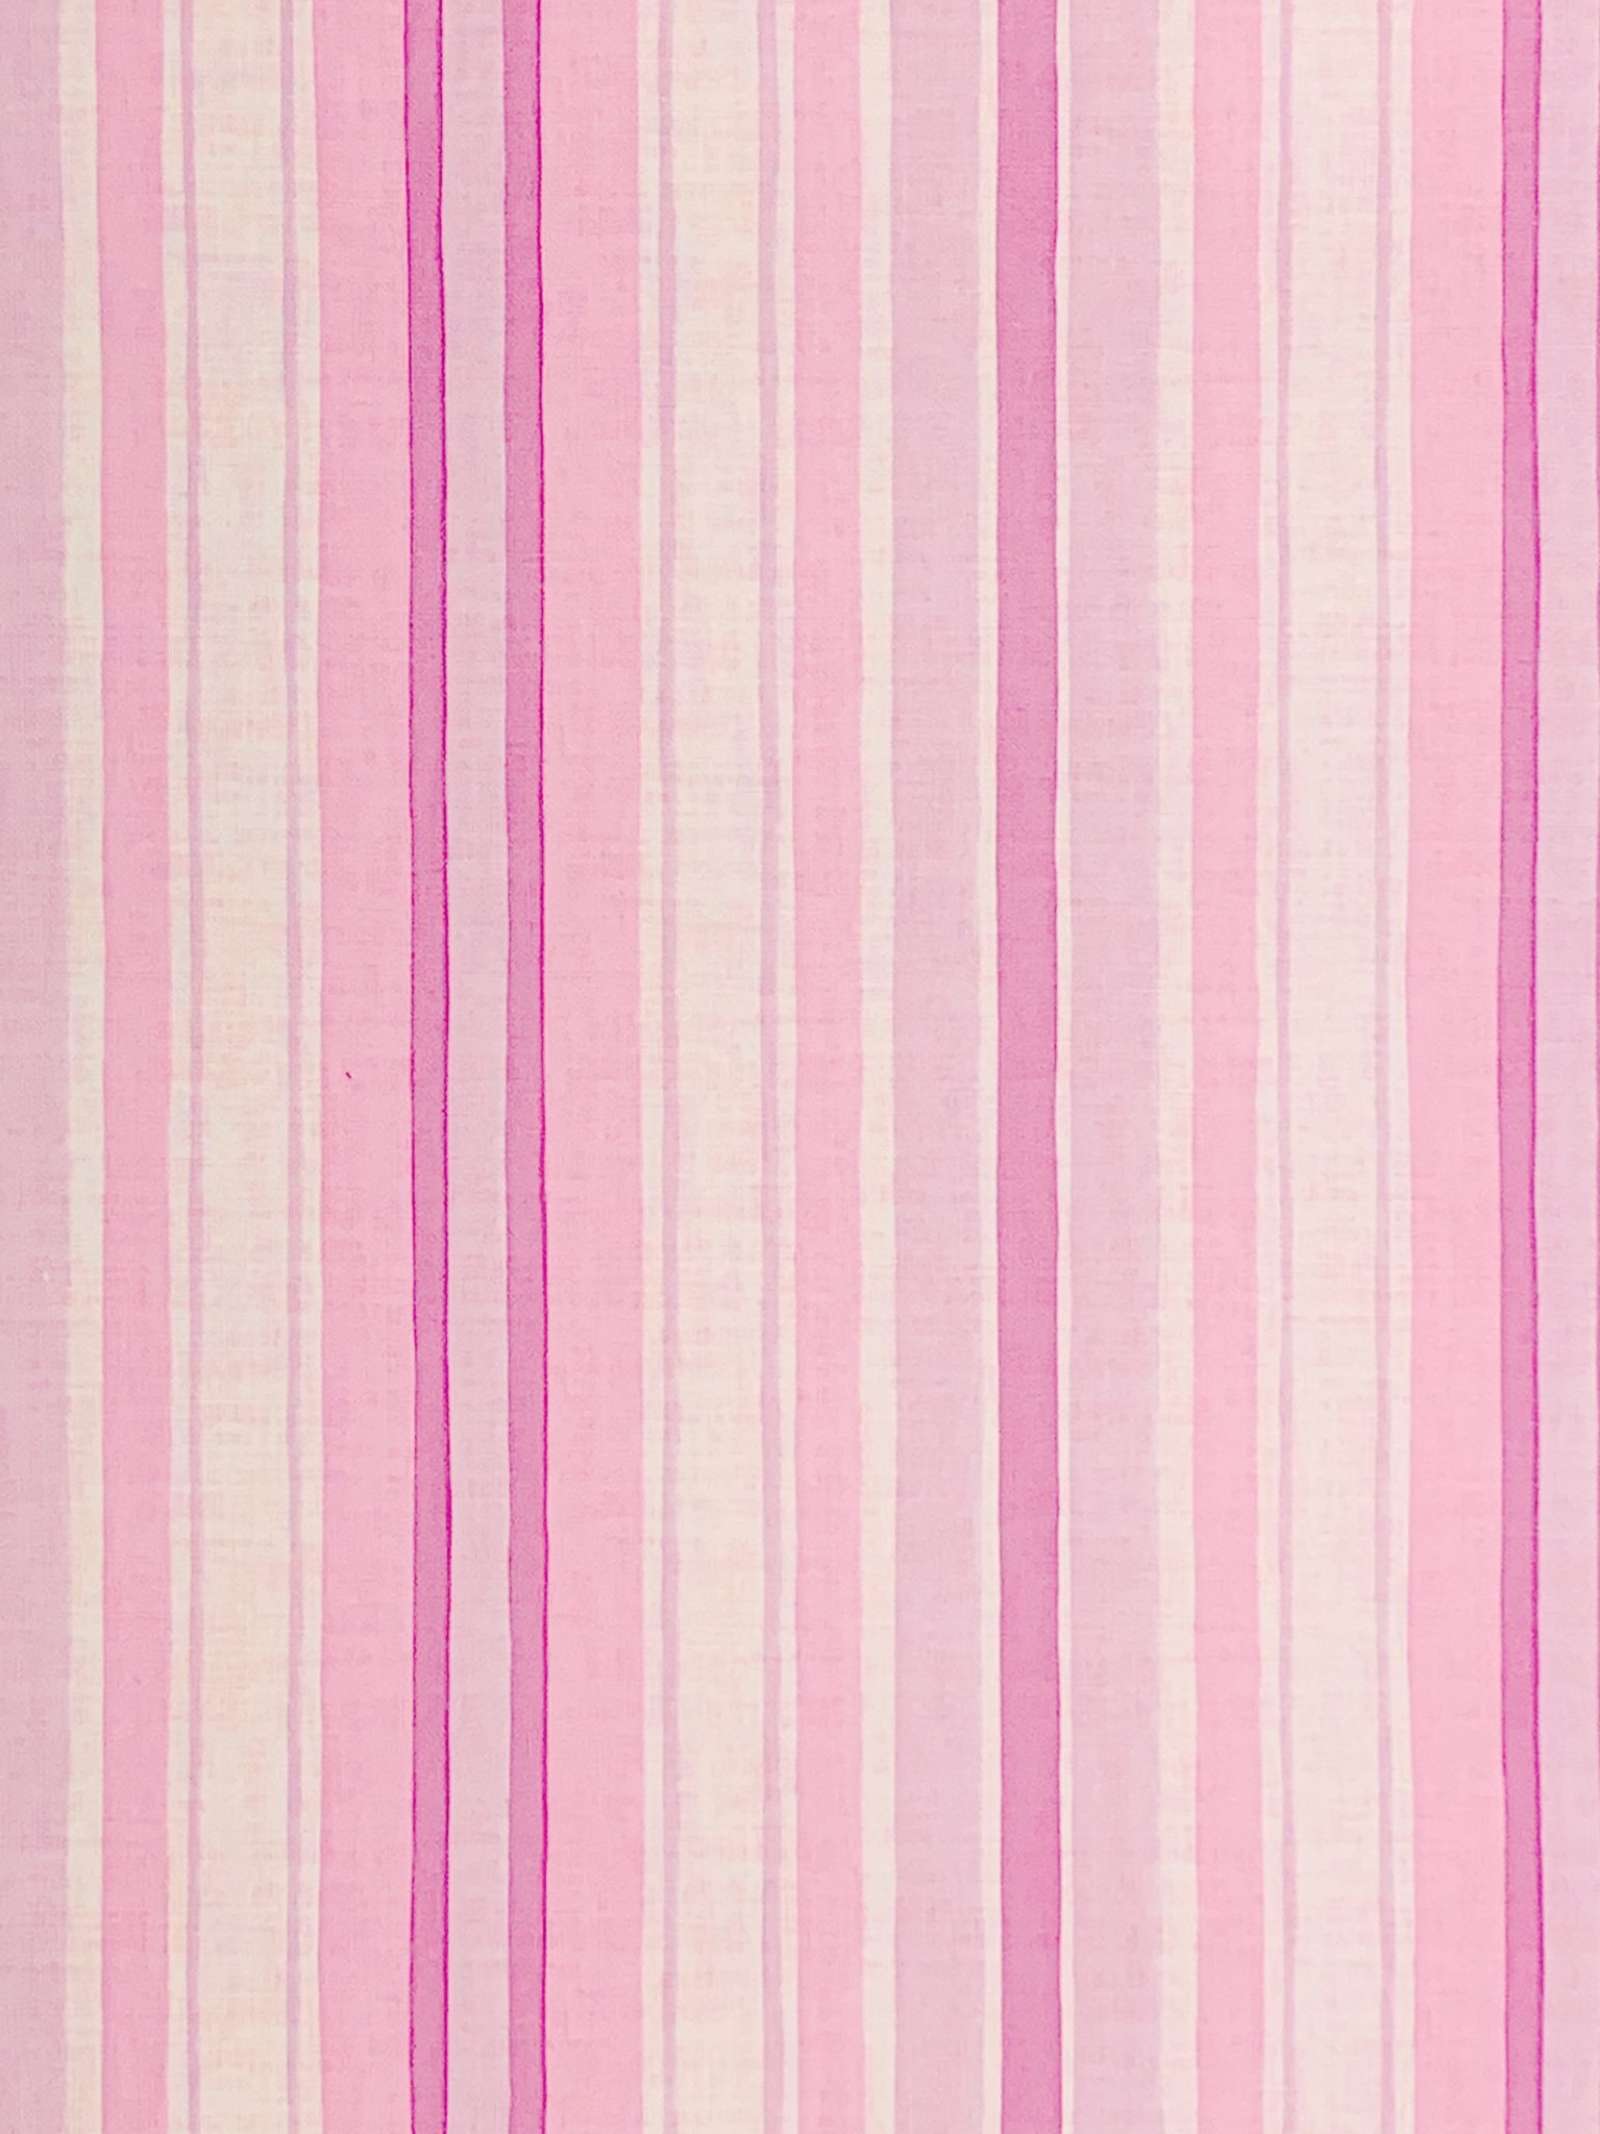 Vintage Wallpaper Shop. Pink Striped Wallpaper